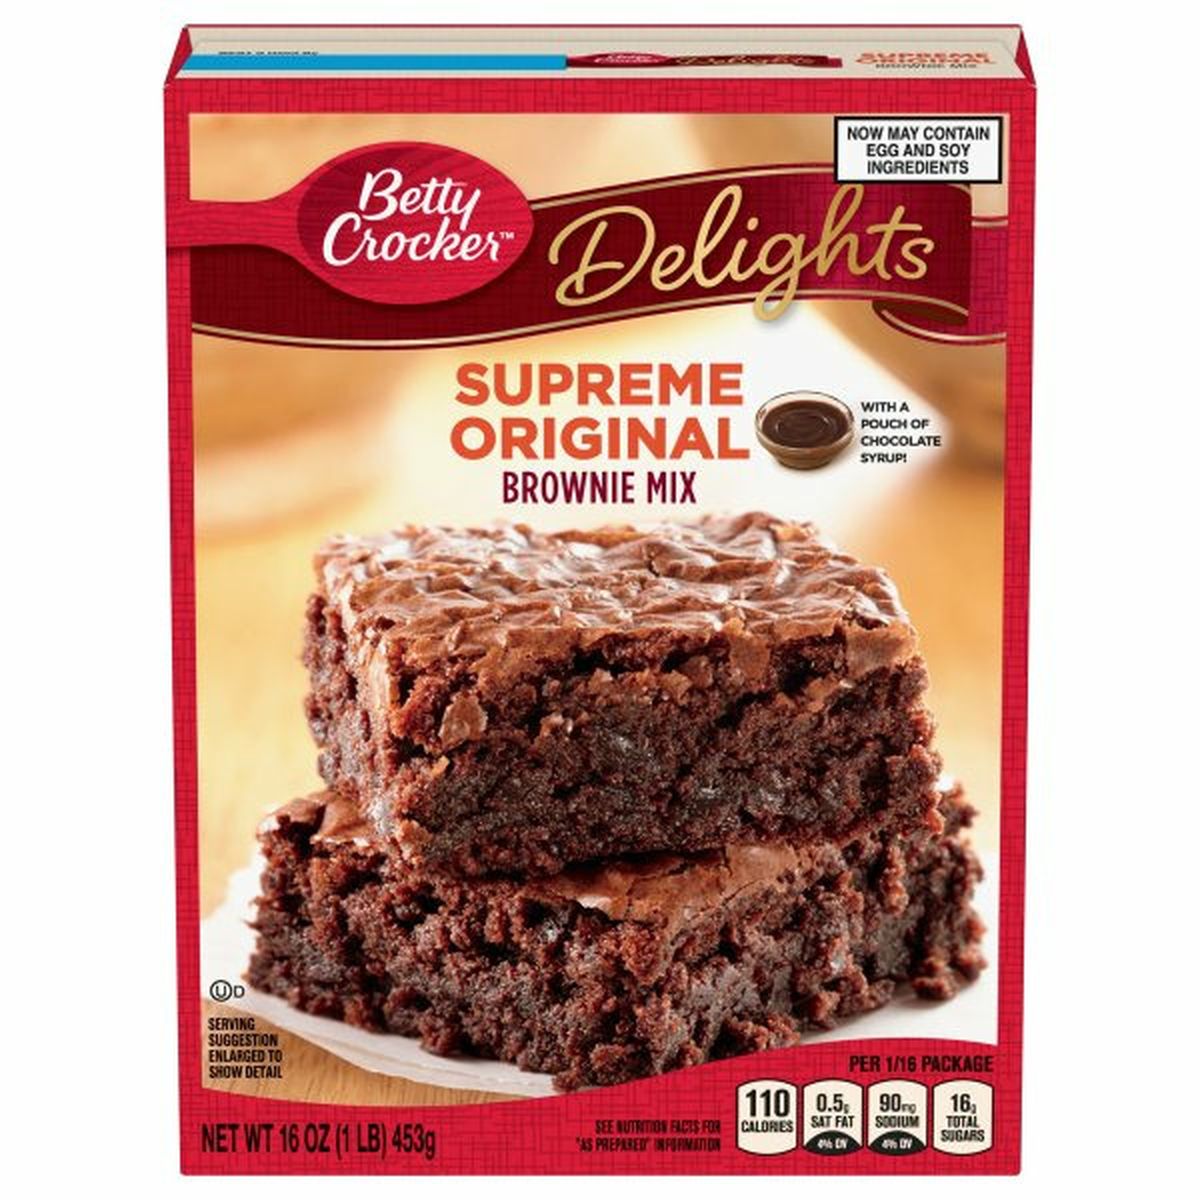 Calories in Betty Crocker Delights Brownie Mix, Supreme Original